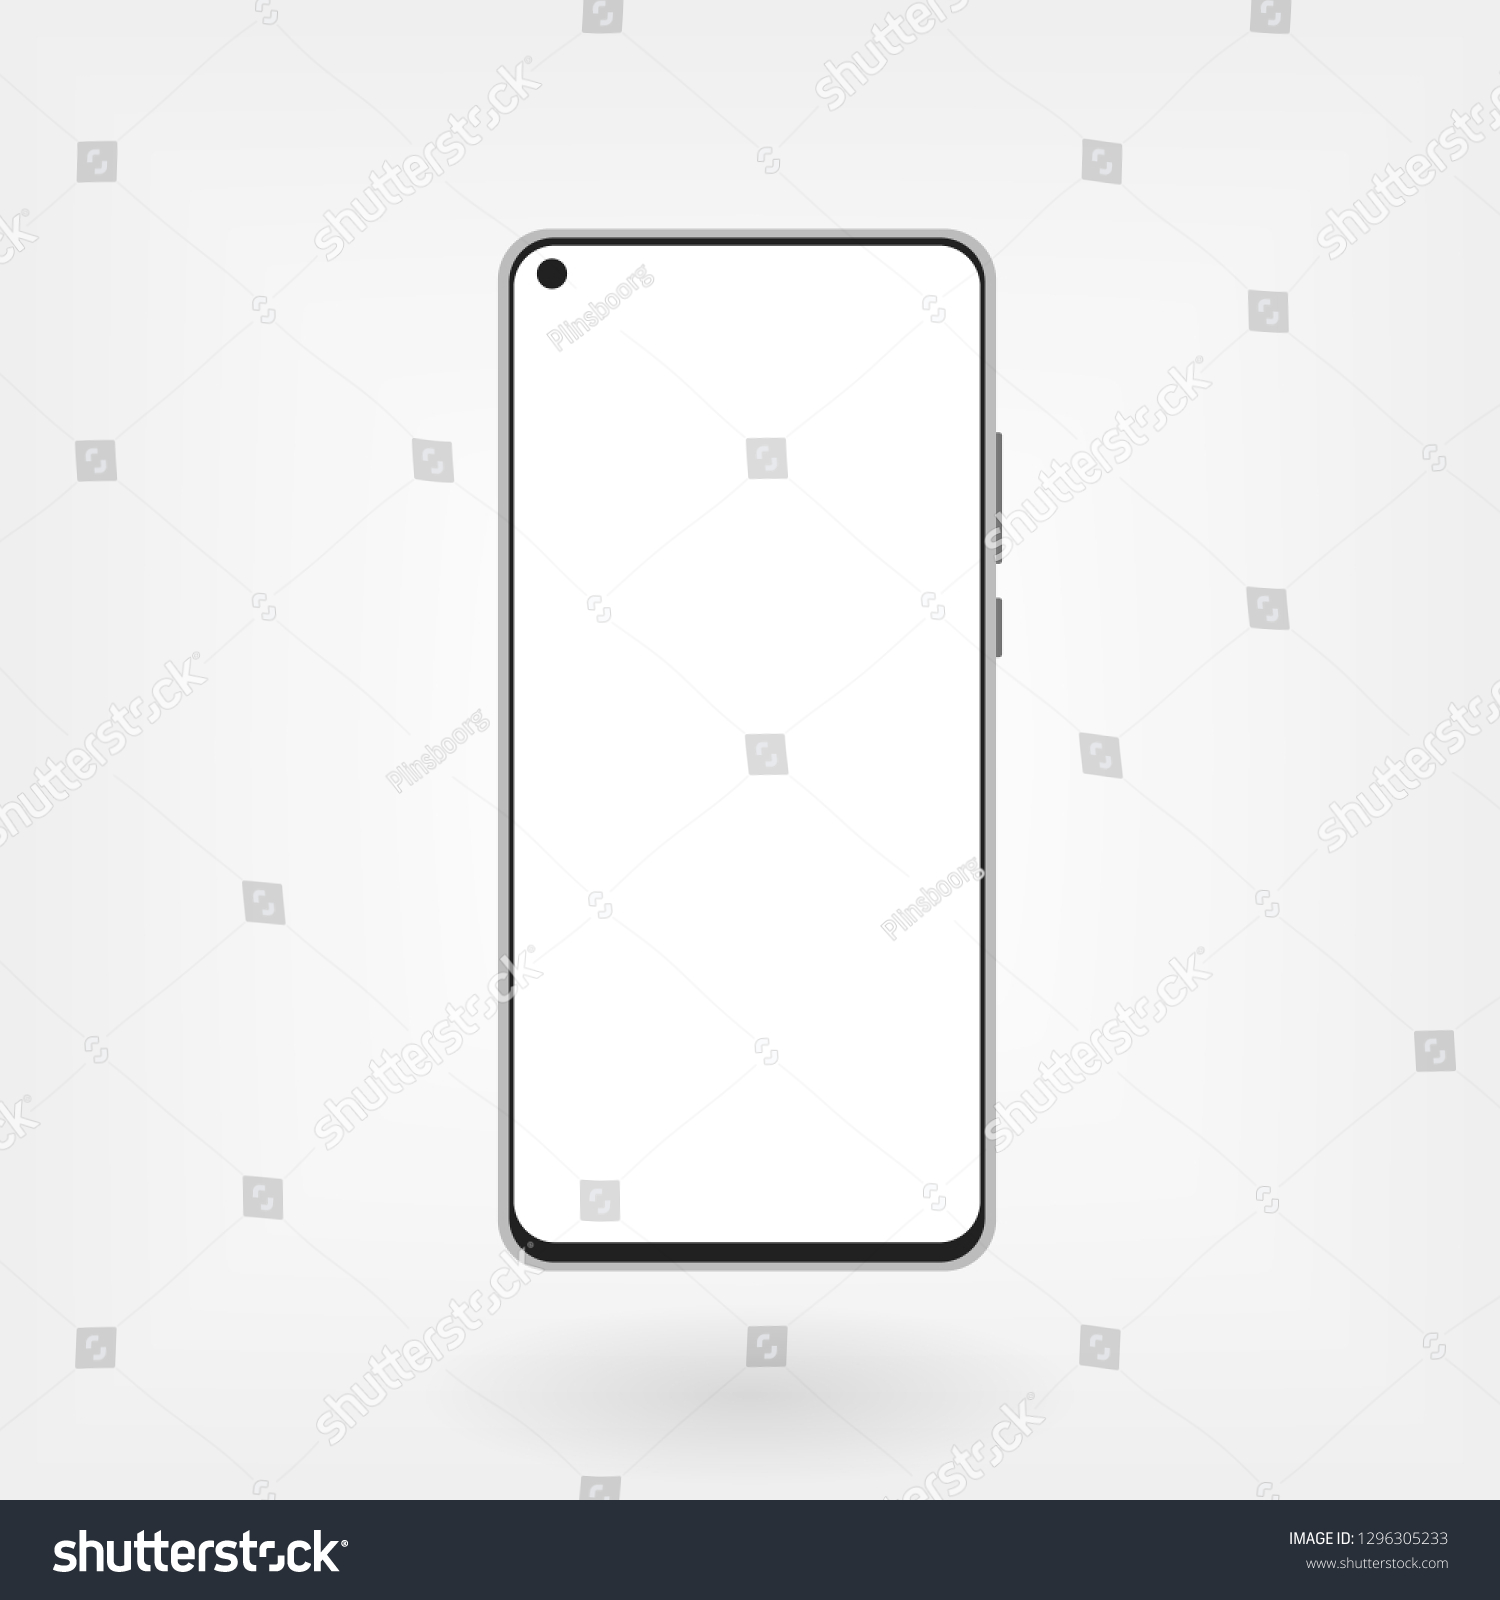 SVG of Smartphone mockup with hole in display. Modern front camera design svg